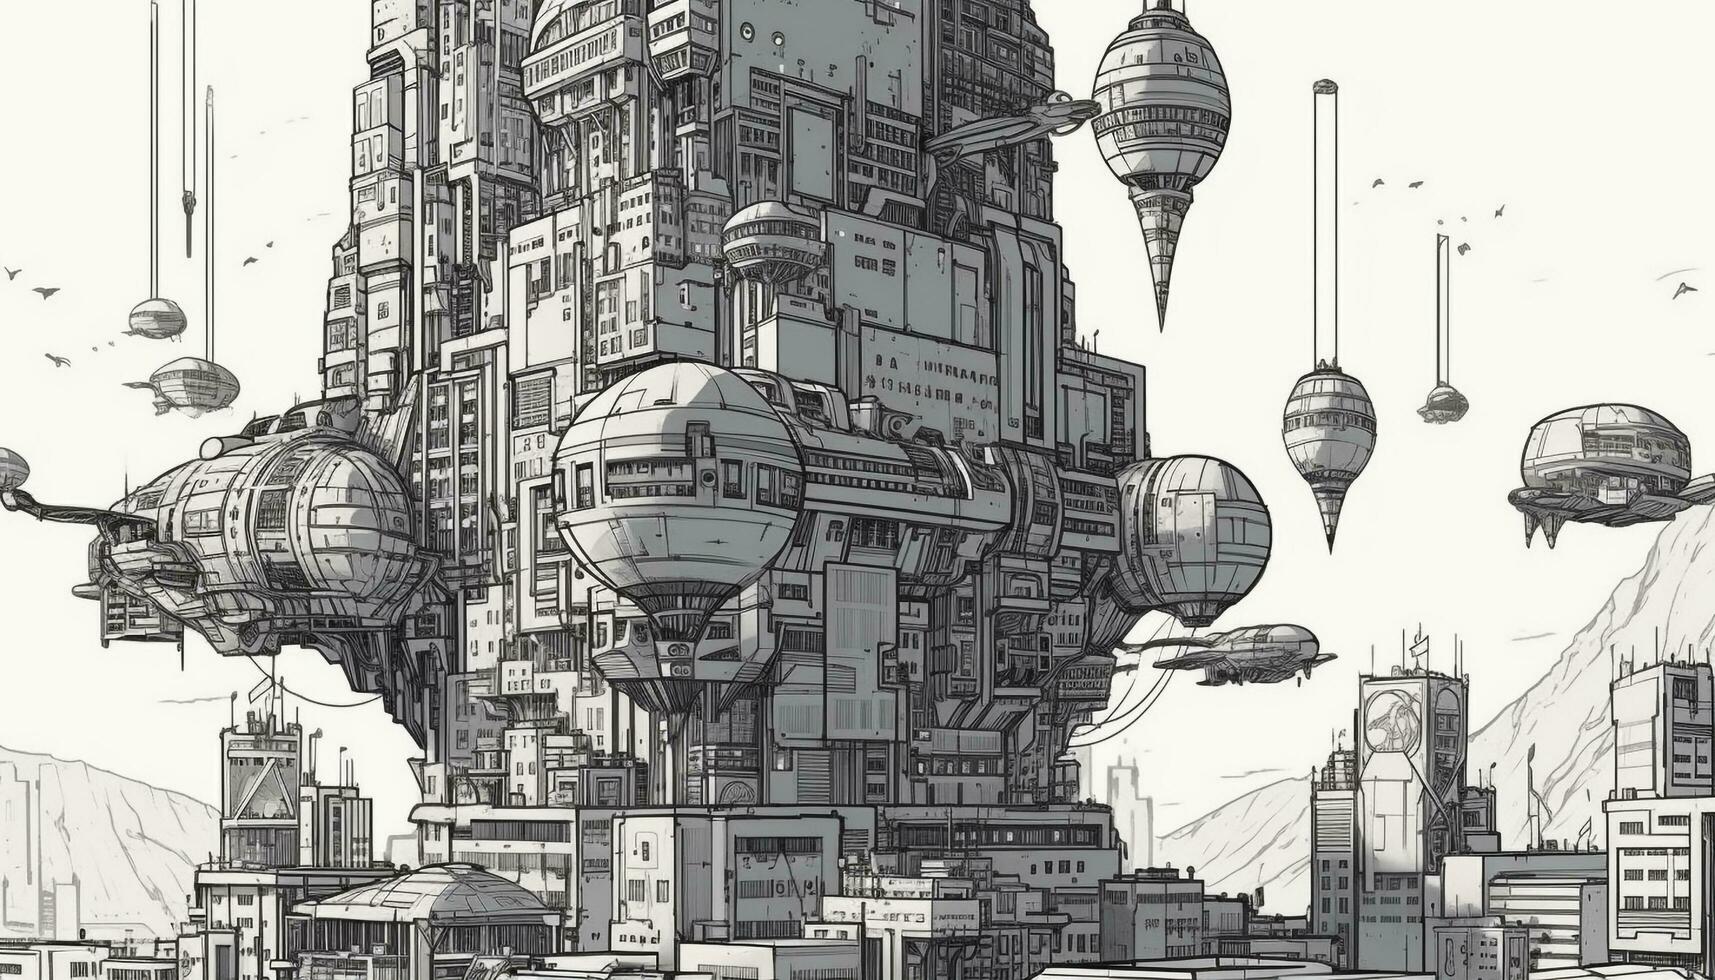 Futuristic cityscape Skyscrapers, traffic, and architecture merge generated by AI photo